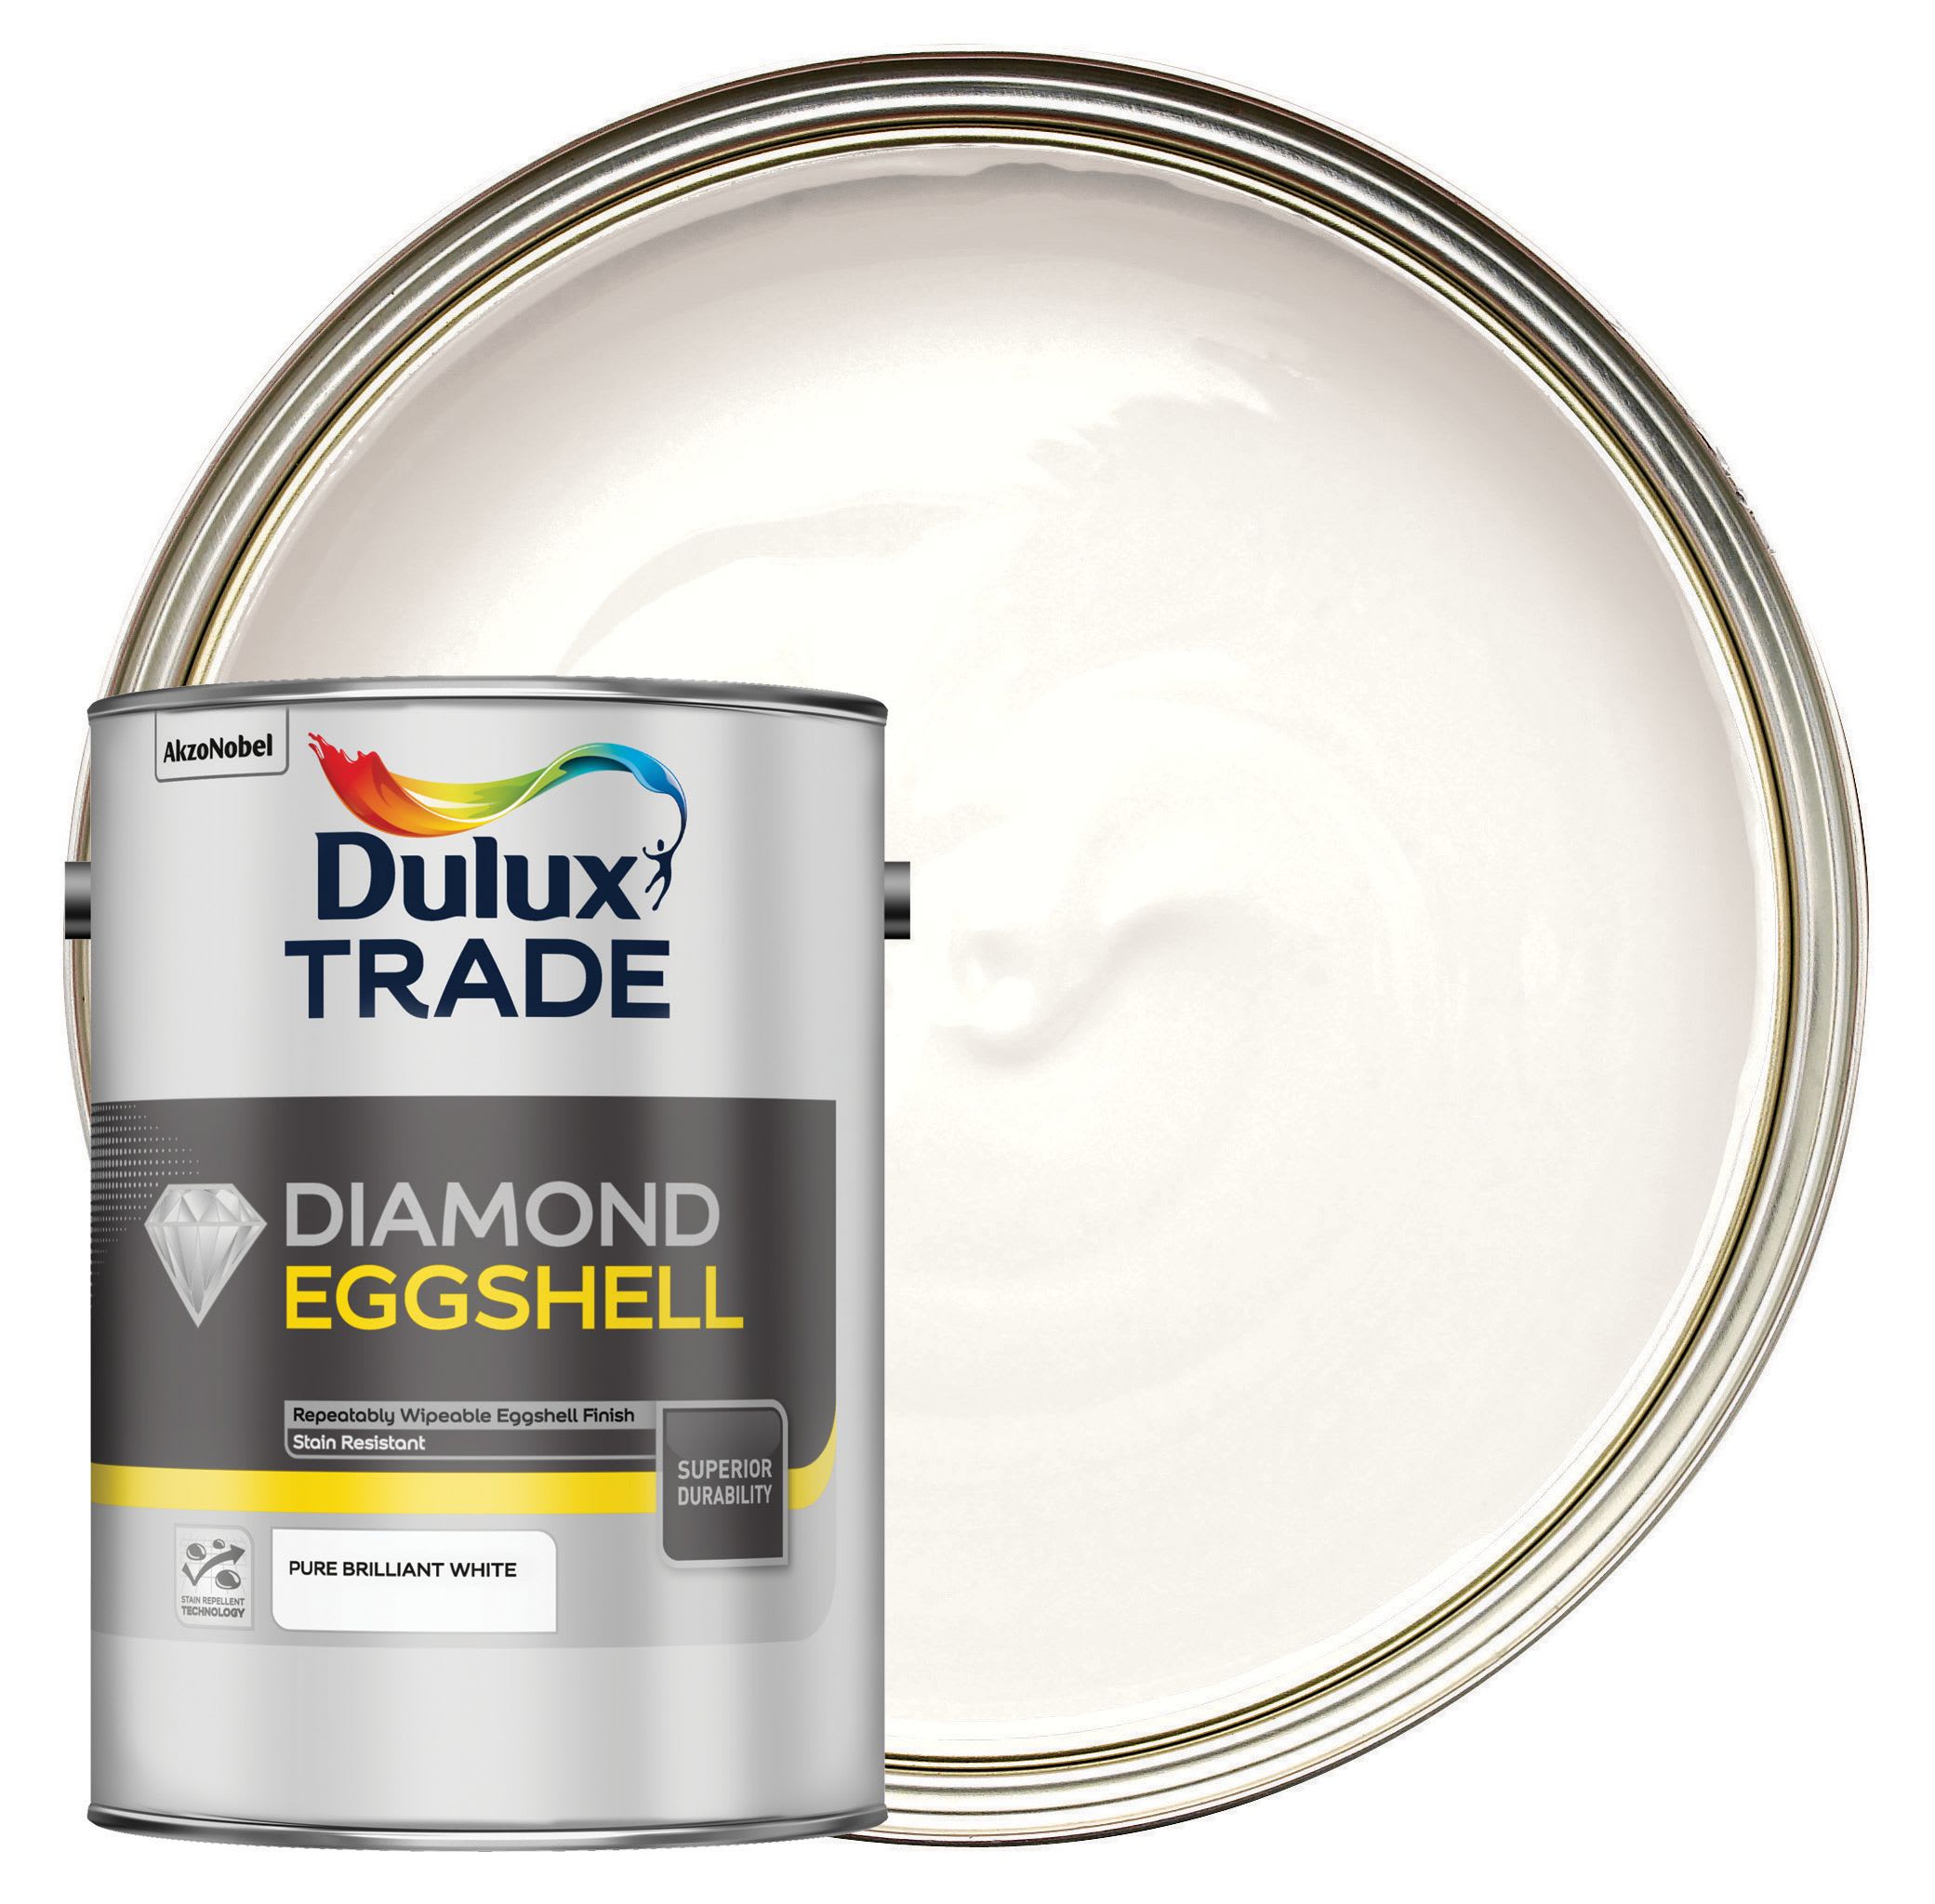 Dulux Trade Diamond Eggshell Emulsion Paint - Pure